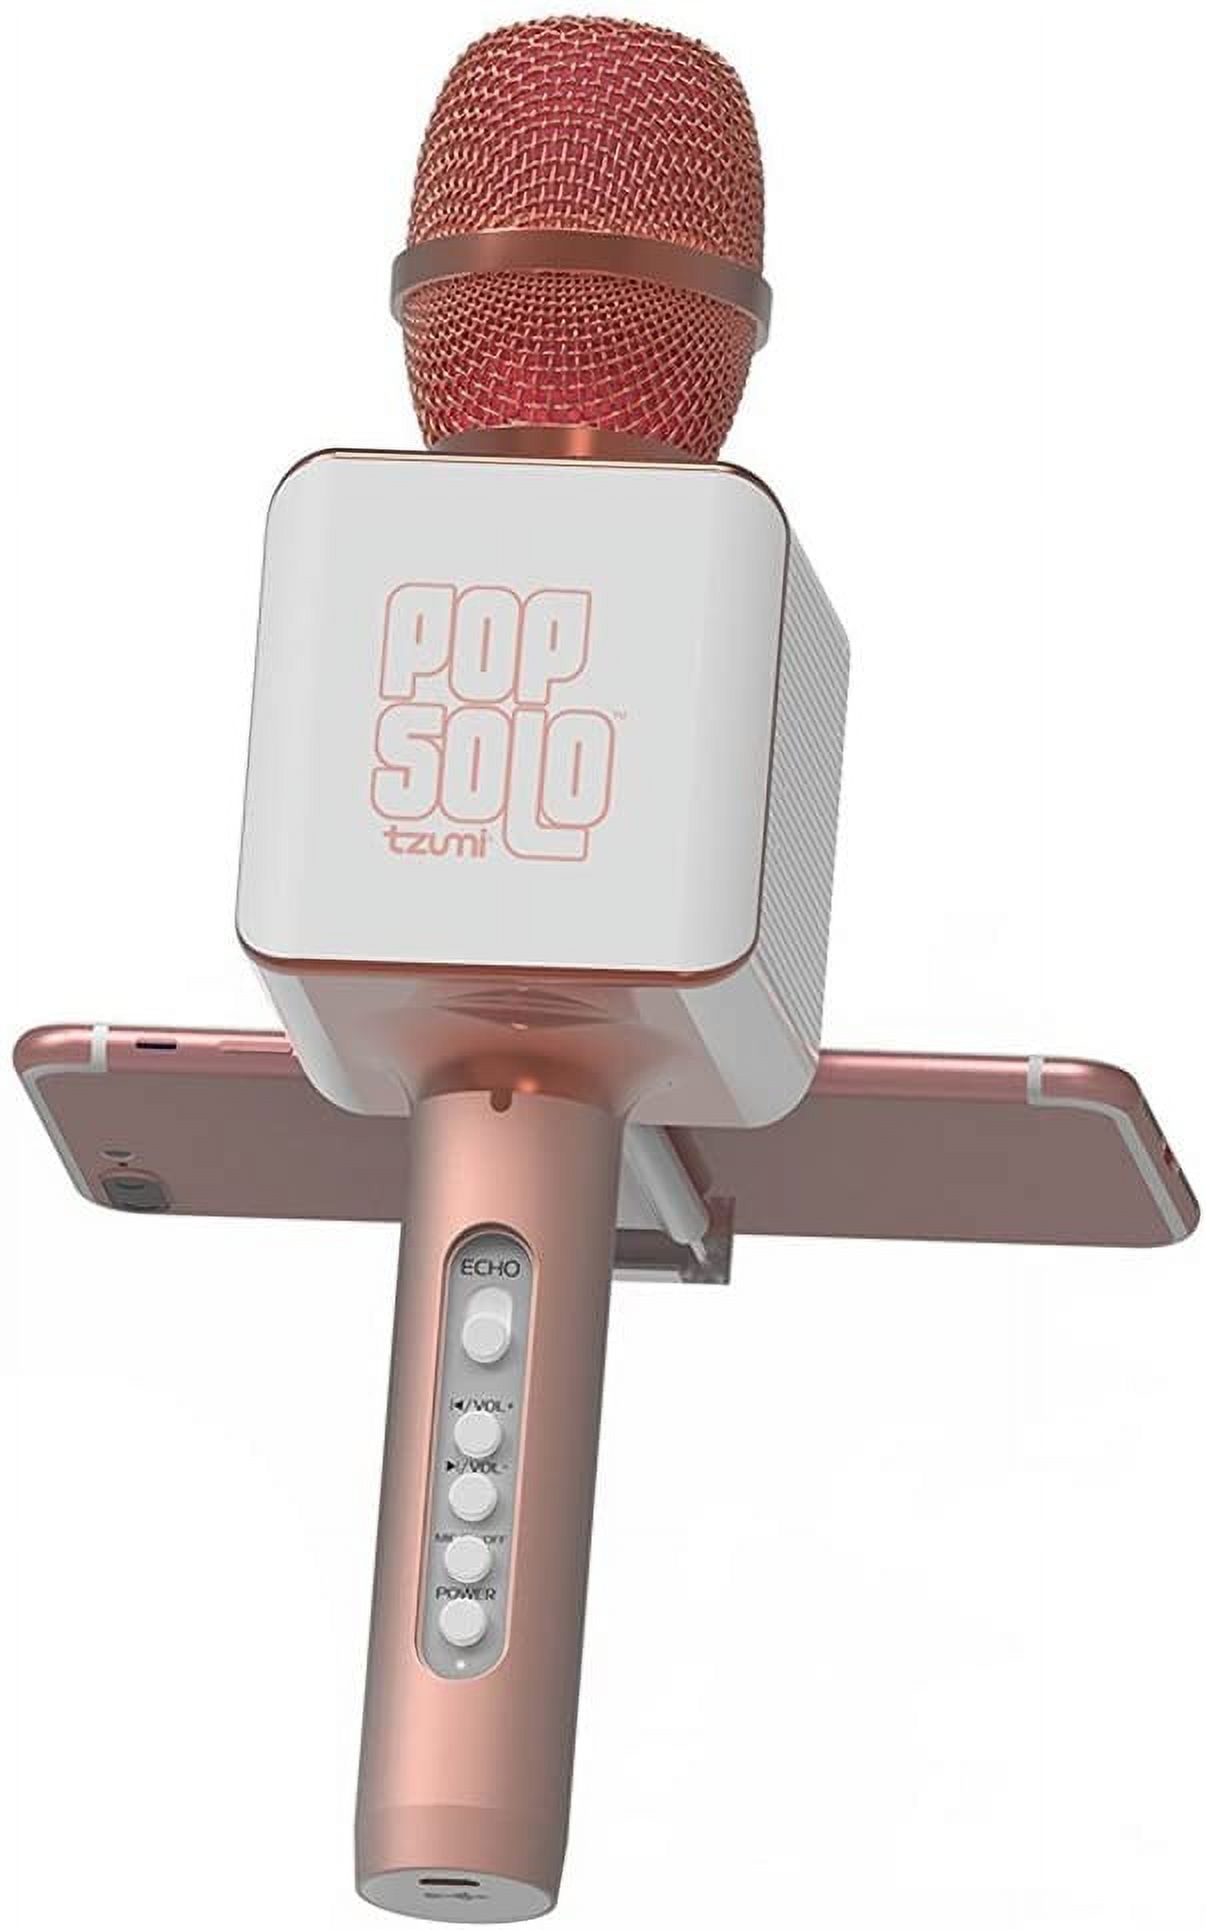 Tzumi PopSolo Wireless Bluetooth Karaoke Microphone (Rose Gold) - image 1 of 5